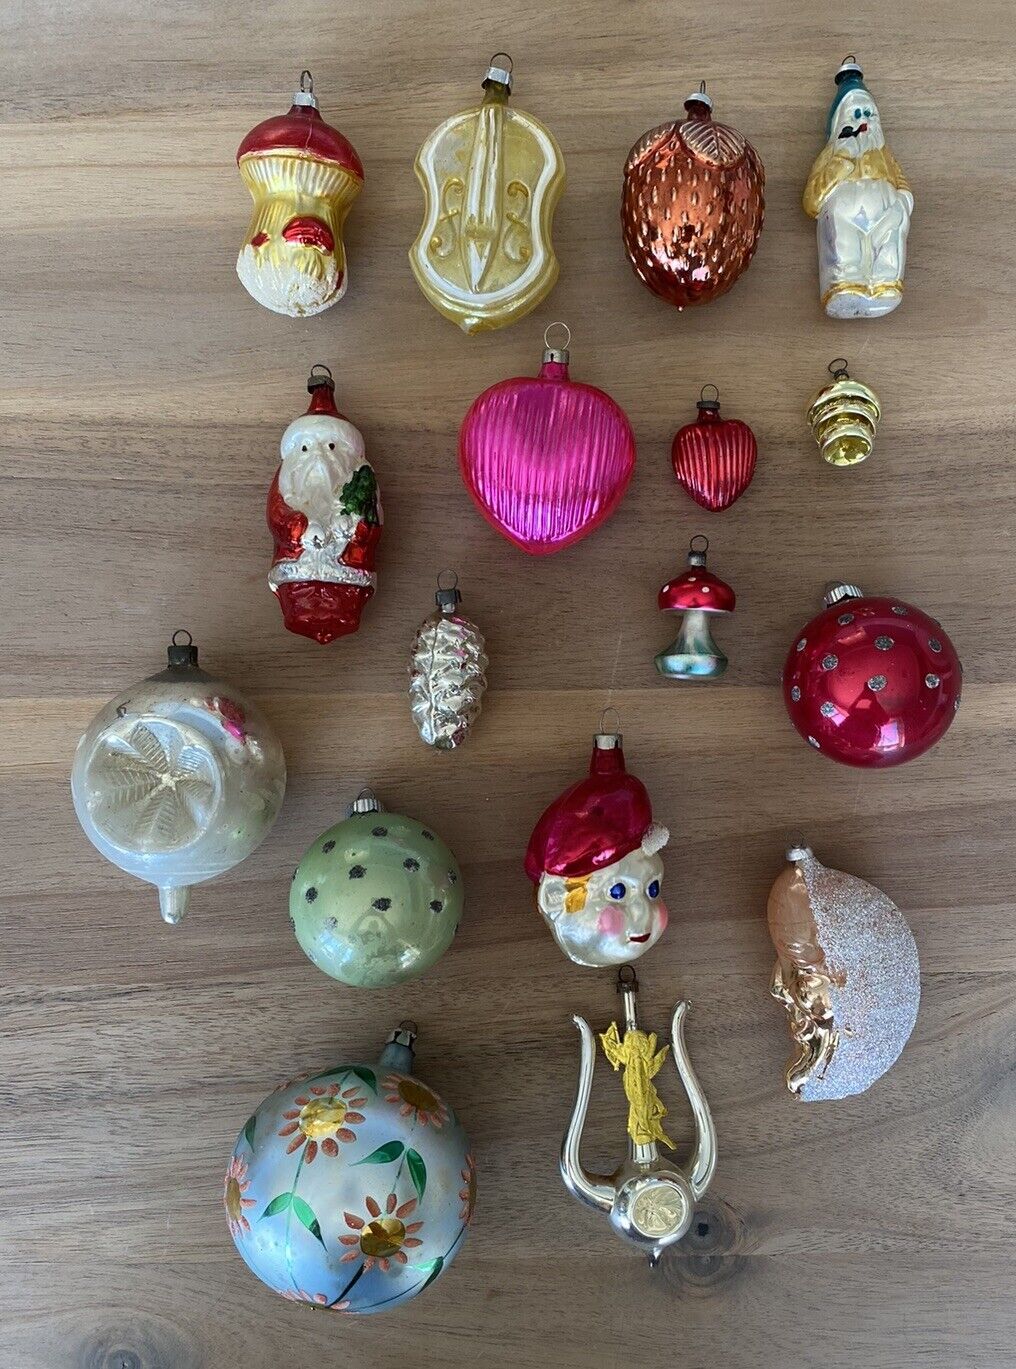 Vintage Blown Glass Christmas Ornaments - Mixed Lot of 17 - Moon, Face, Santa